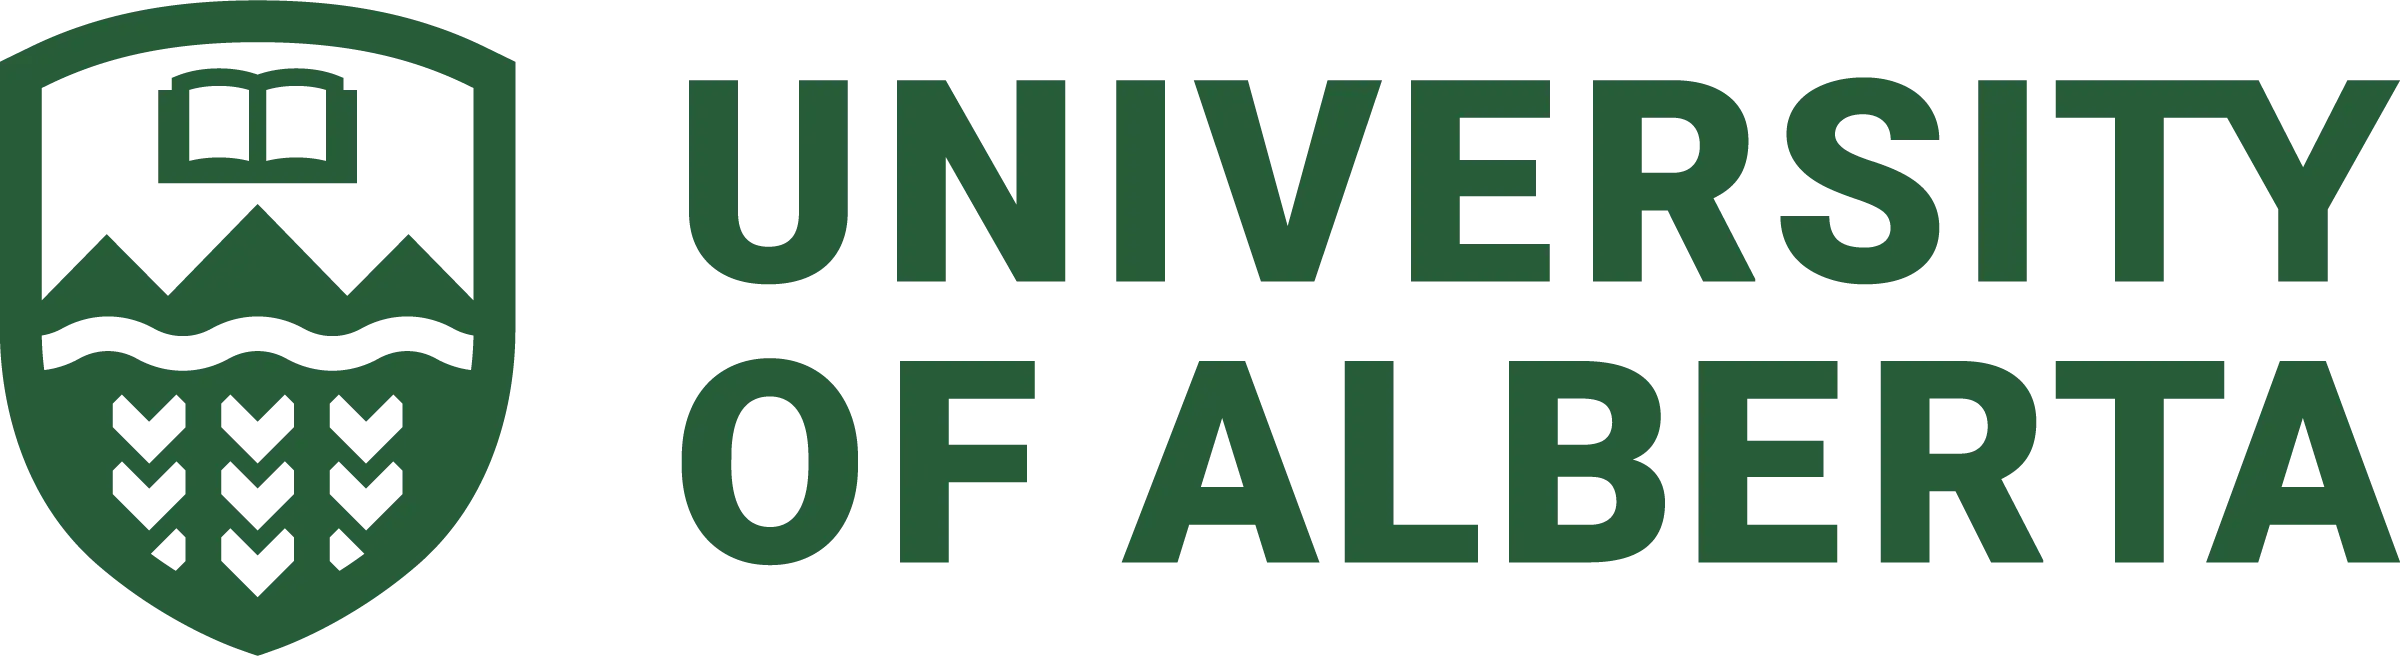 University of Alberta Faculty of Science